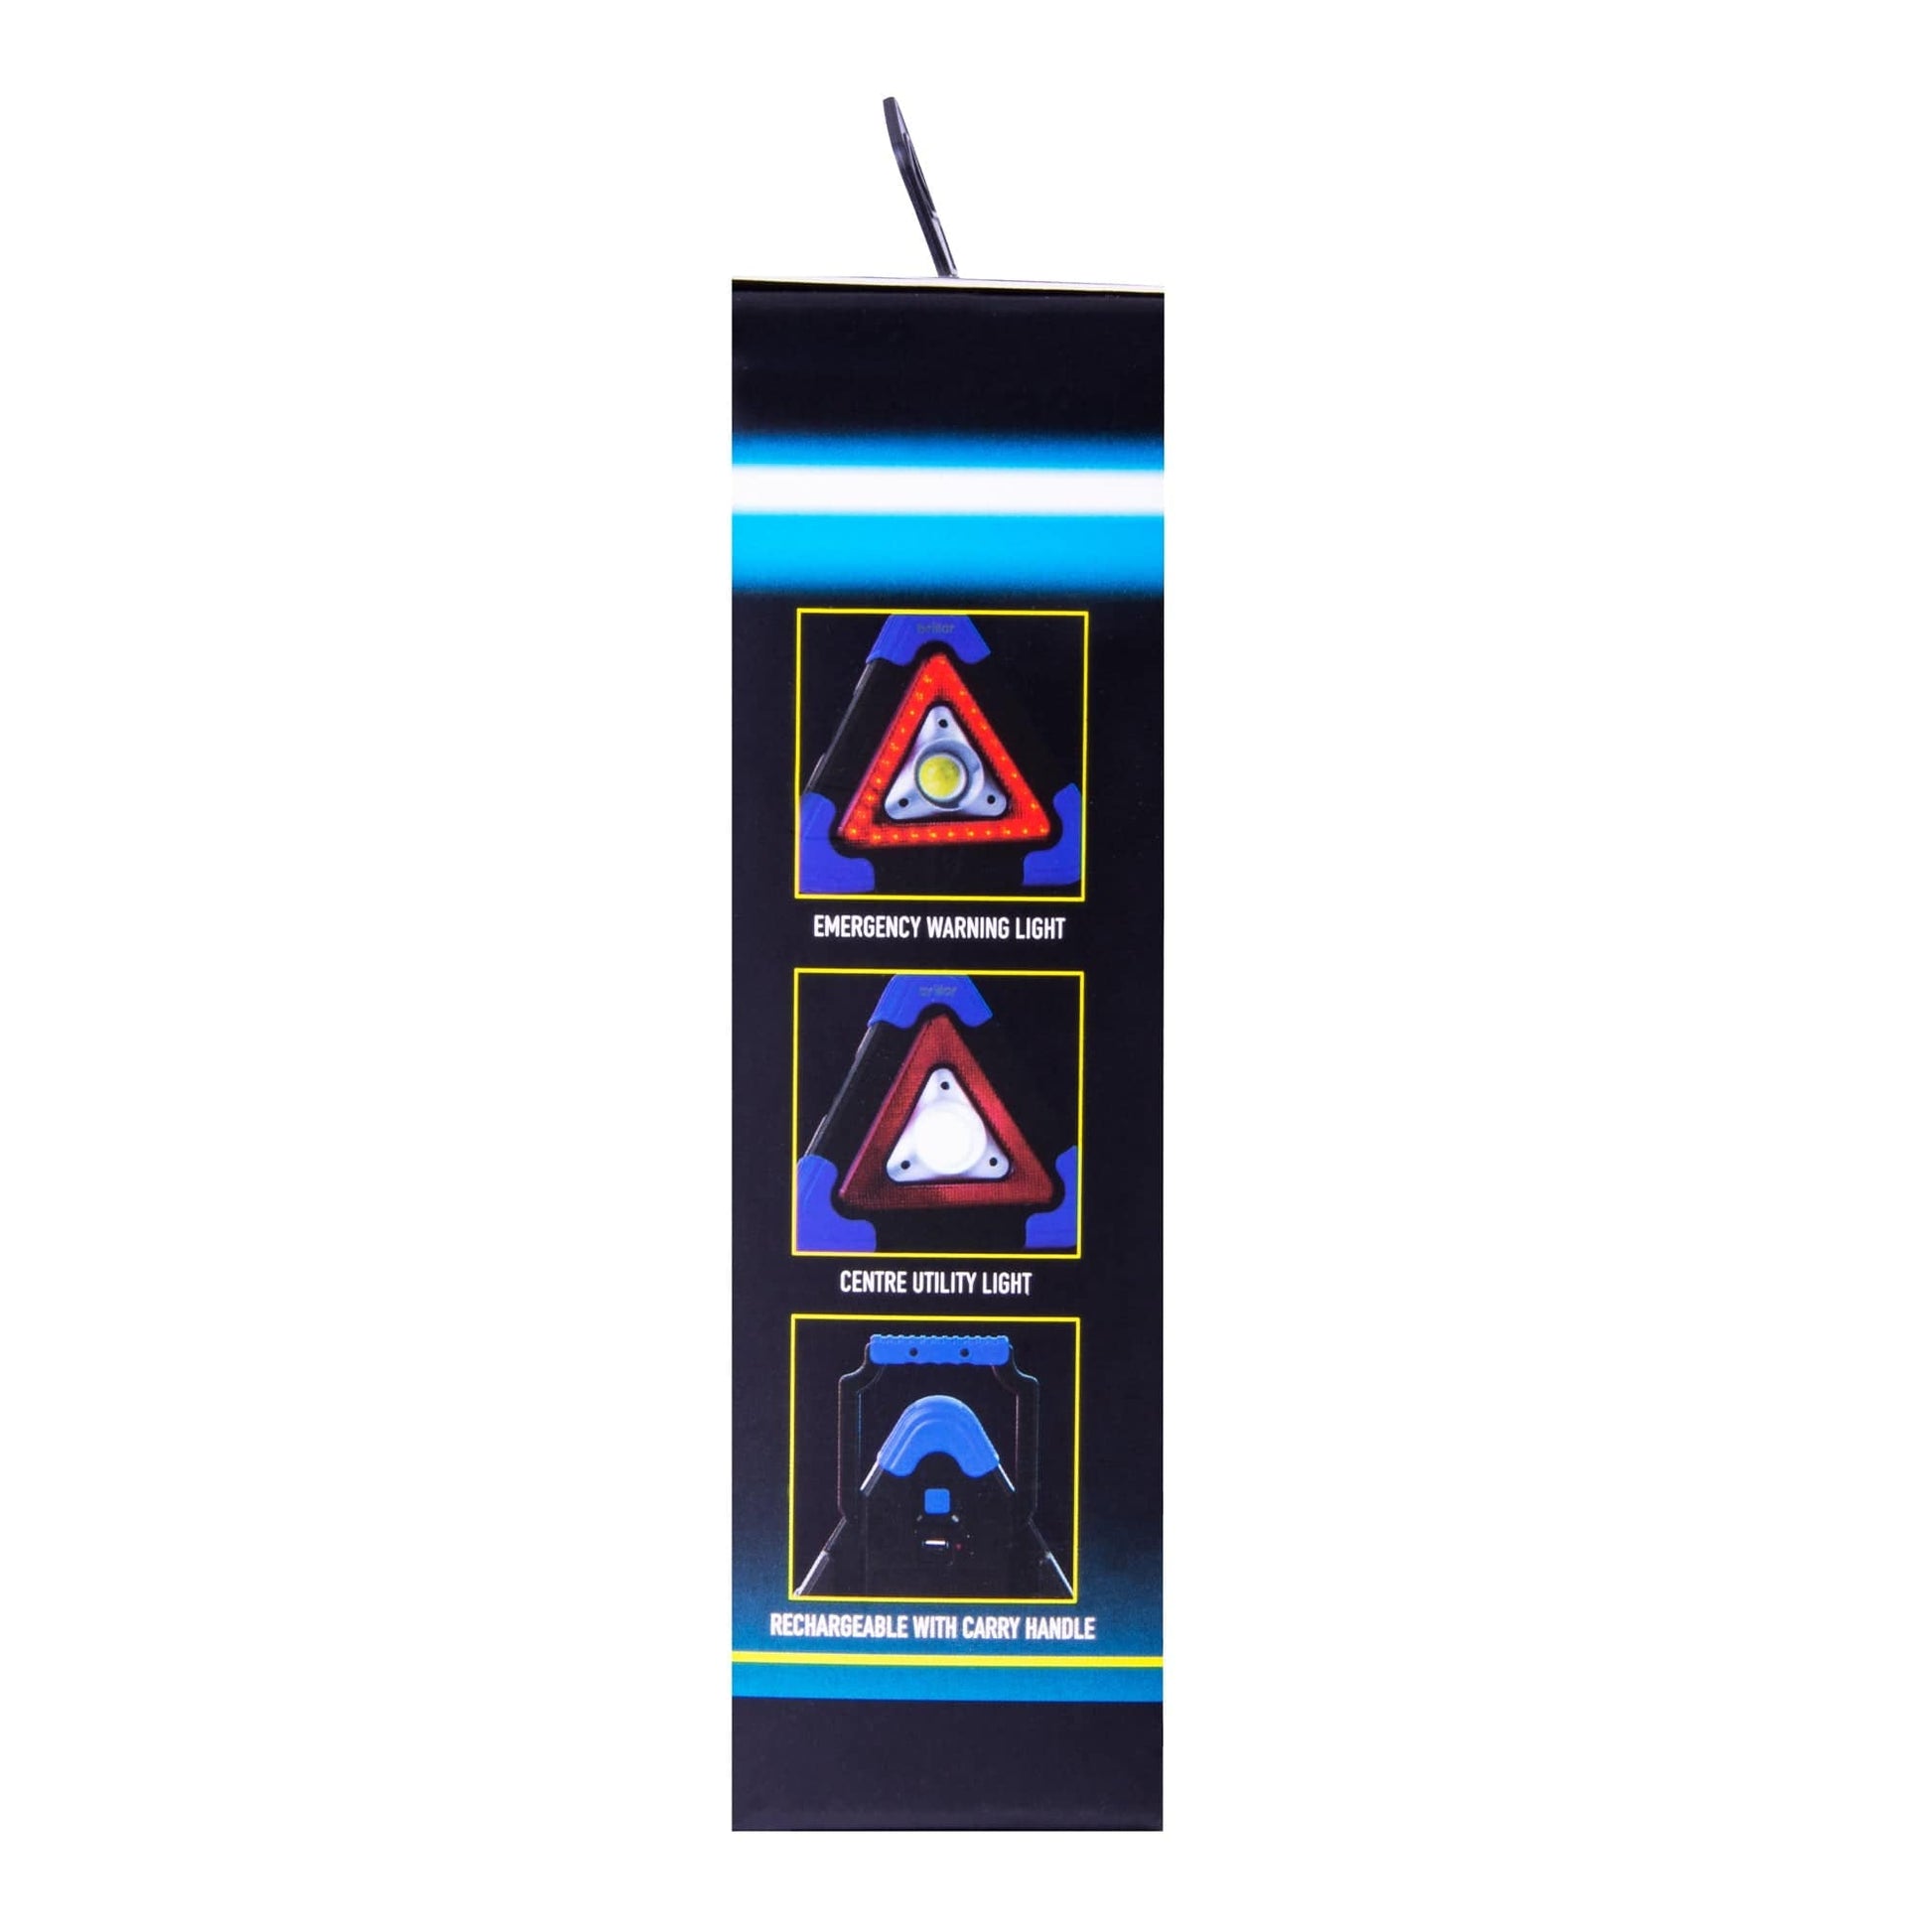 Brillar Brillar Emergency Mate - 300 Lumen Rechargeable Roadside Safety Light